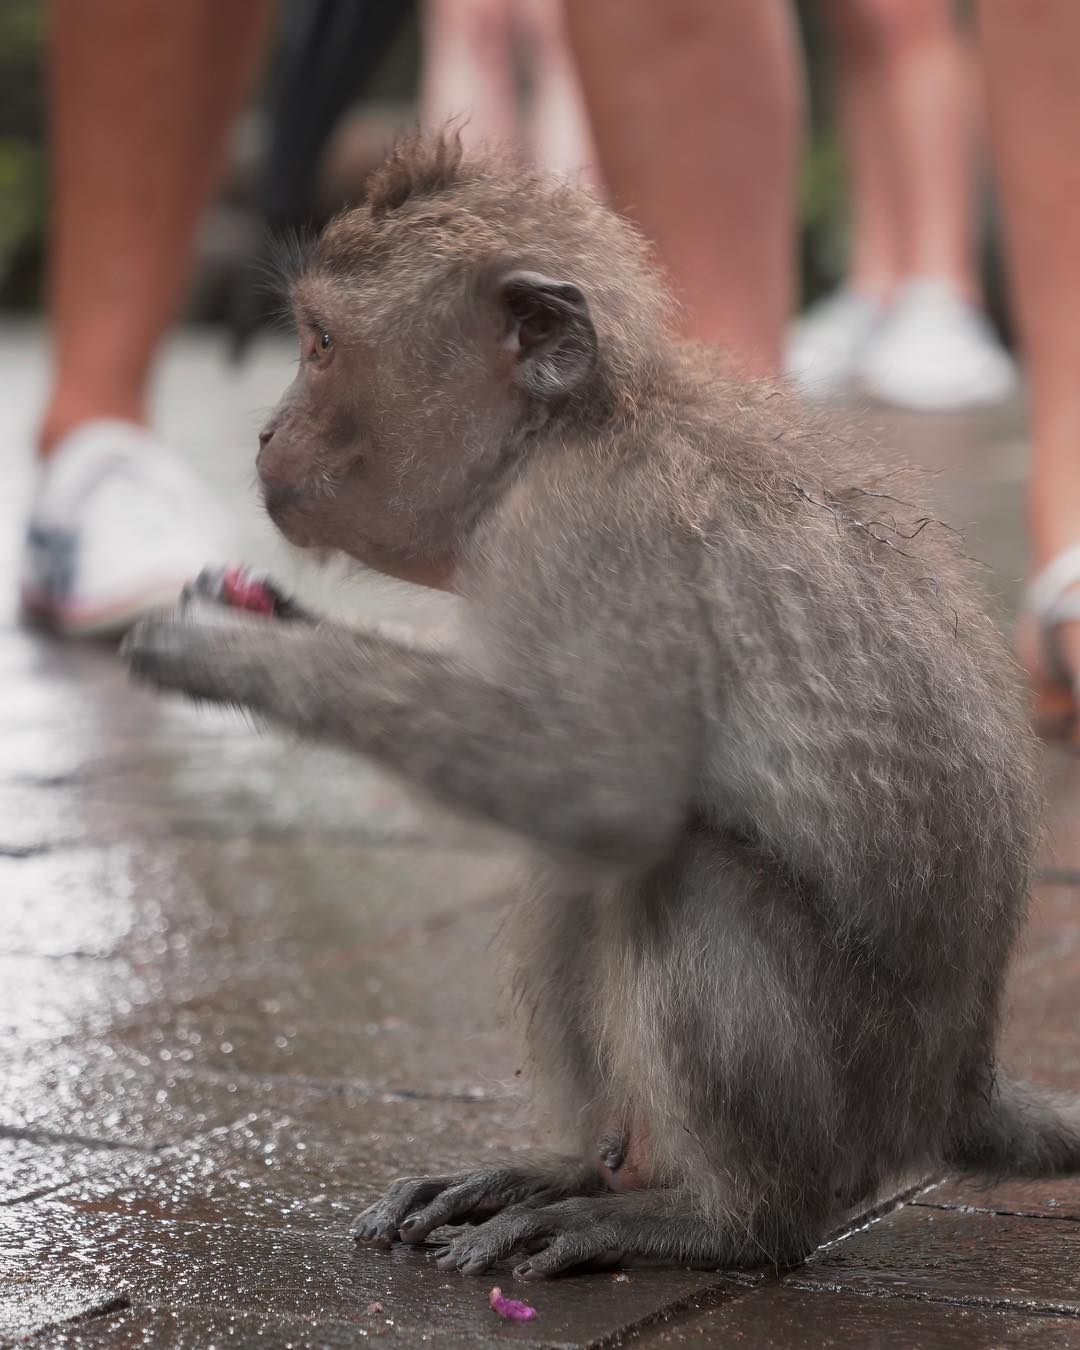 @jrd.montserrat "Little baby at Monkey Forest, Ubud..."